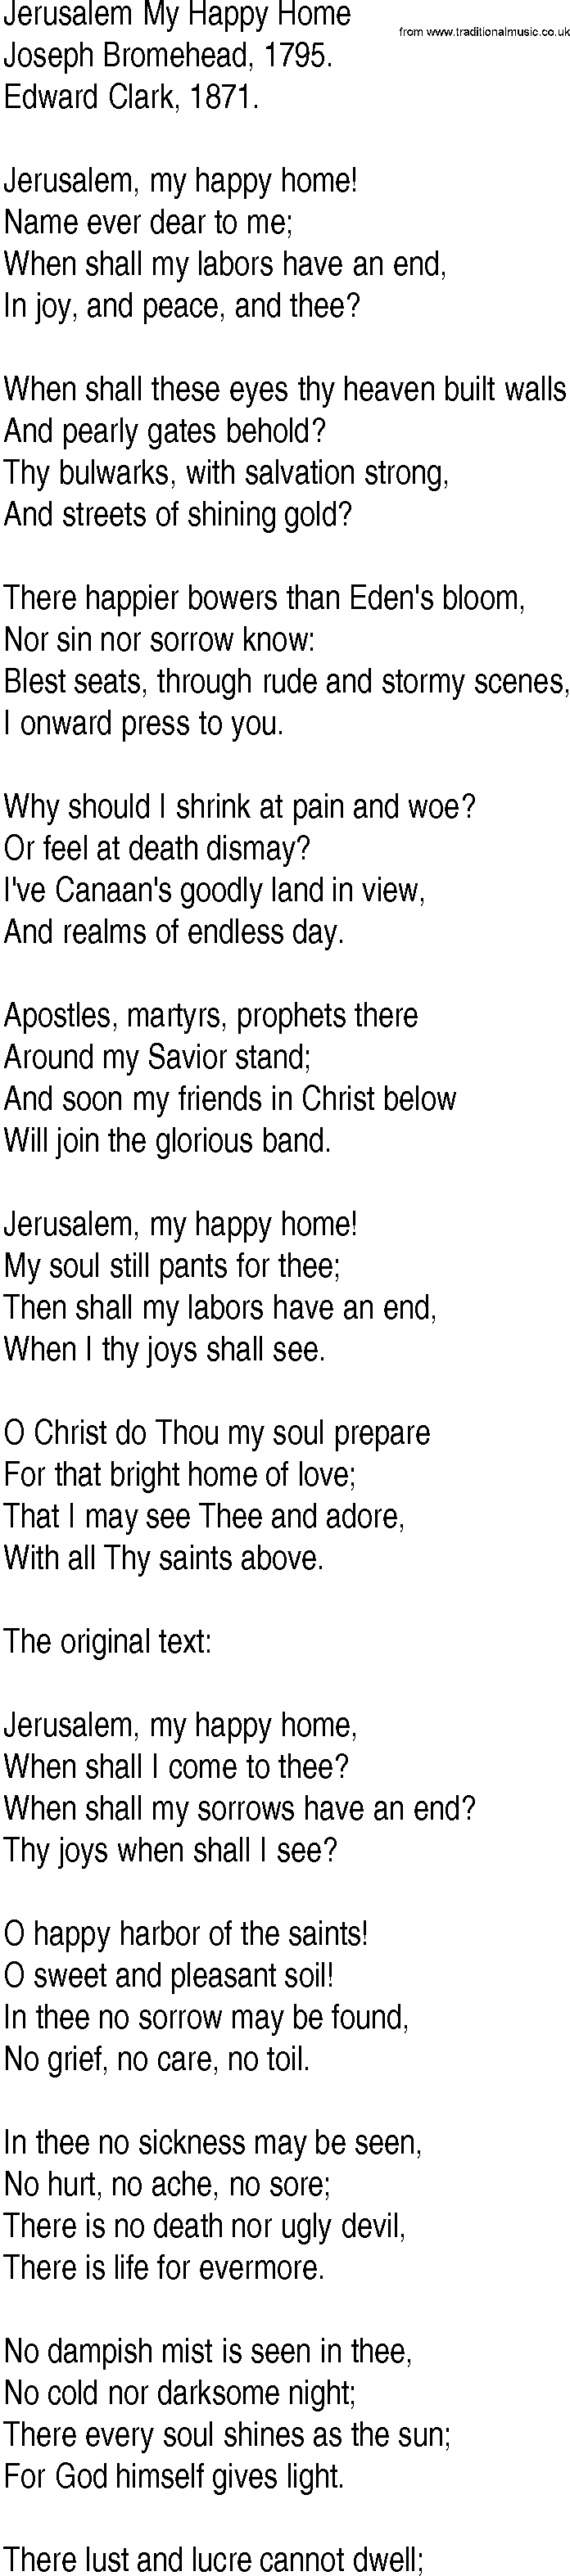 Hymn and Gospel Song: Jerusalem My Happy Home by Joseph Bromehead lyrics